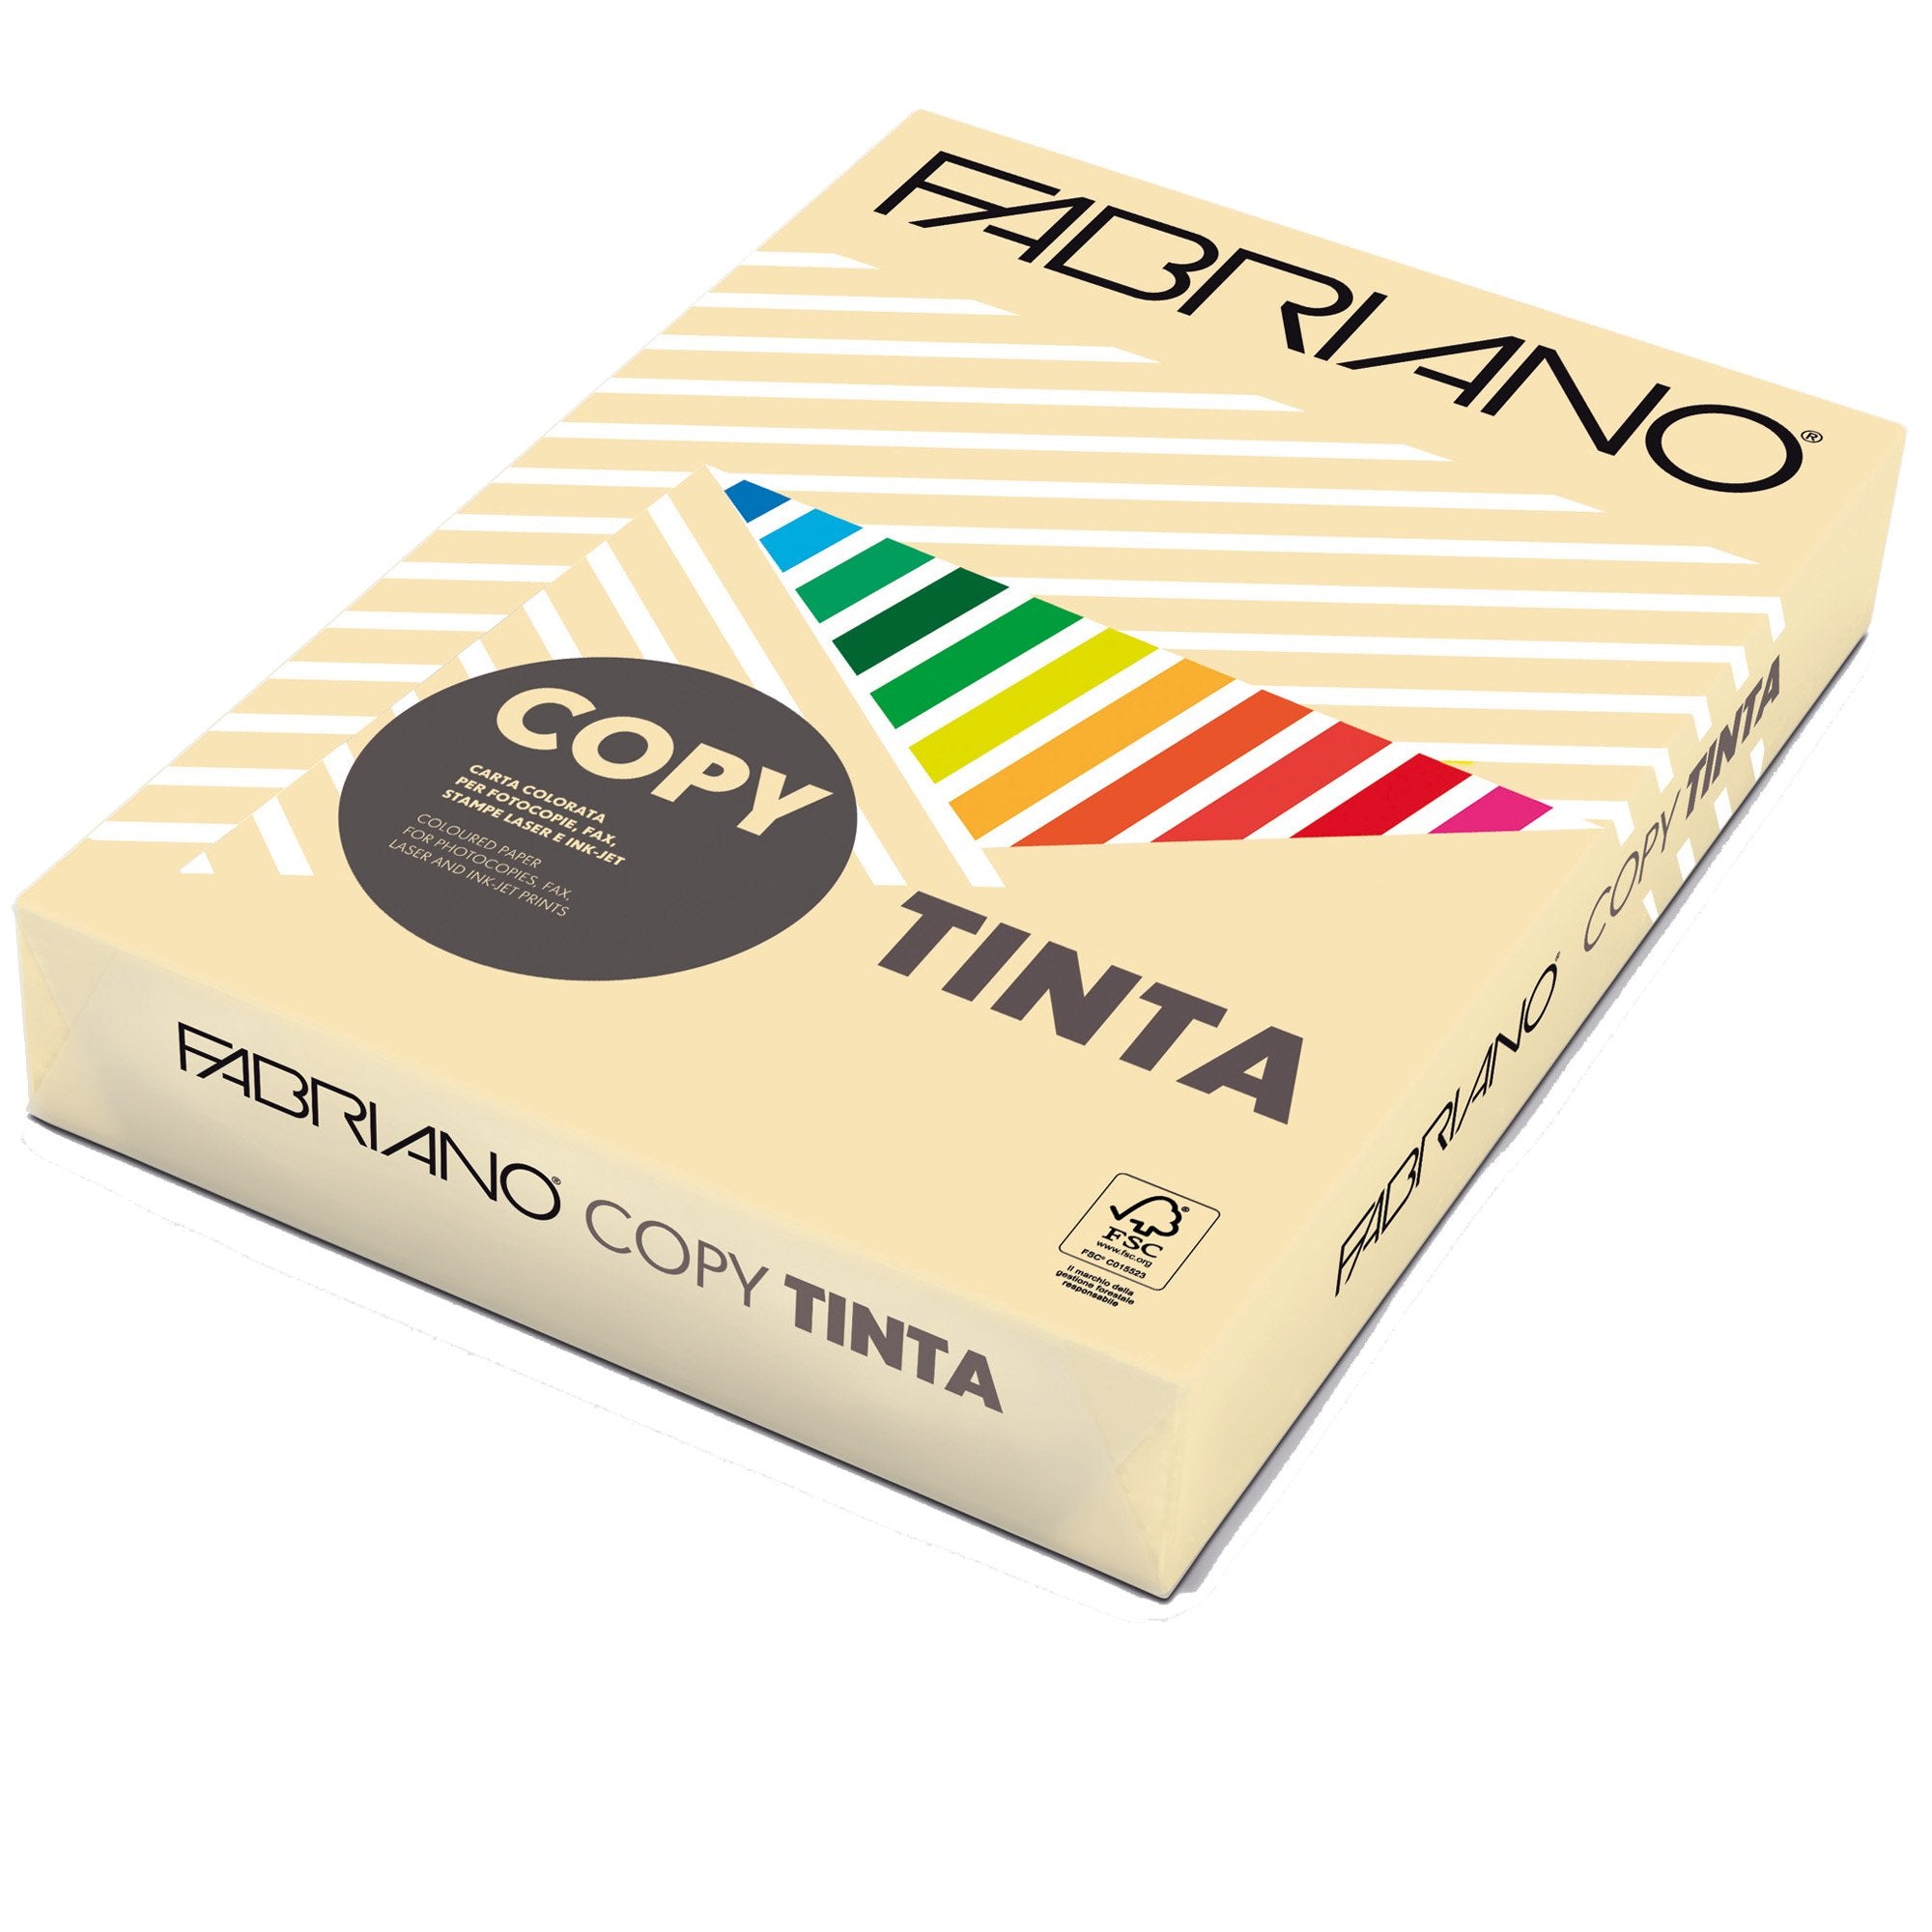 fabriano-carta-copy-tinta-a4-80gr-500fg-col-tenue-onice